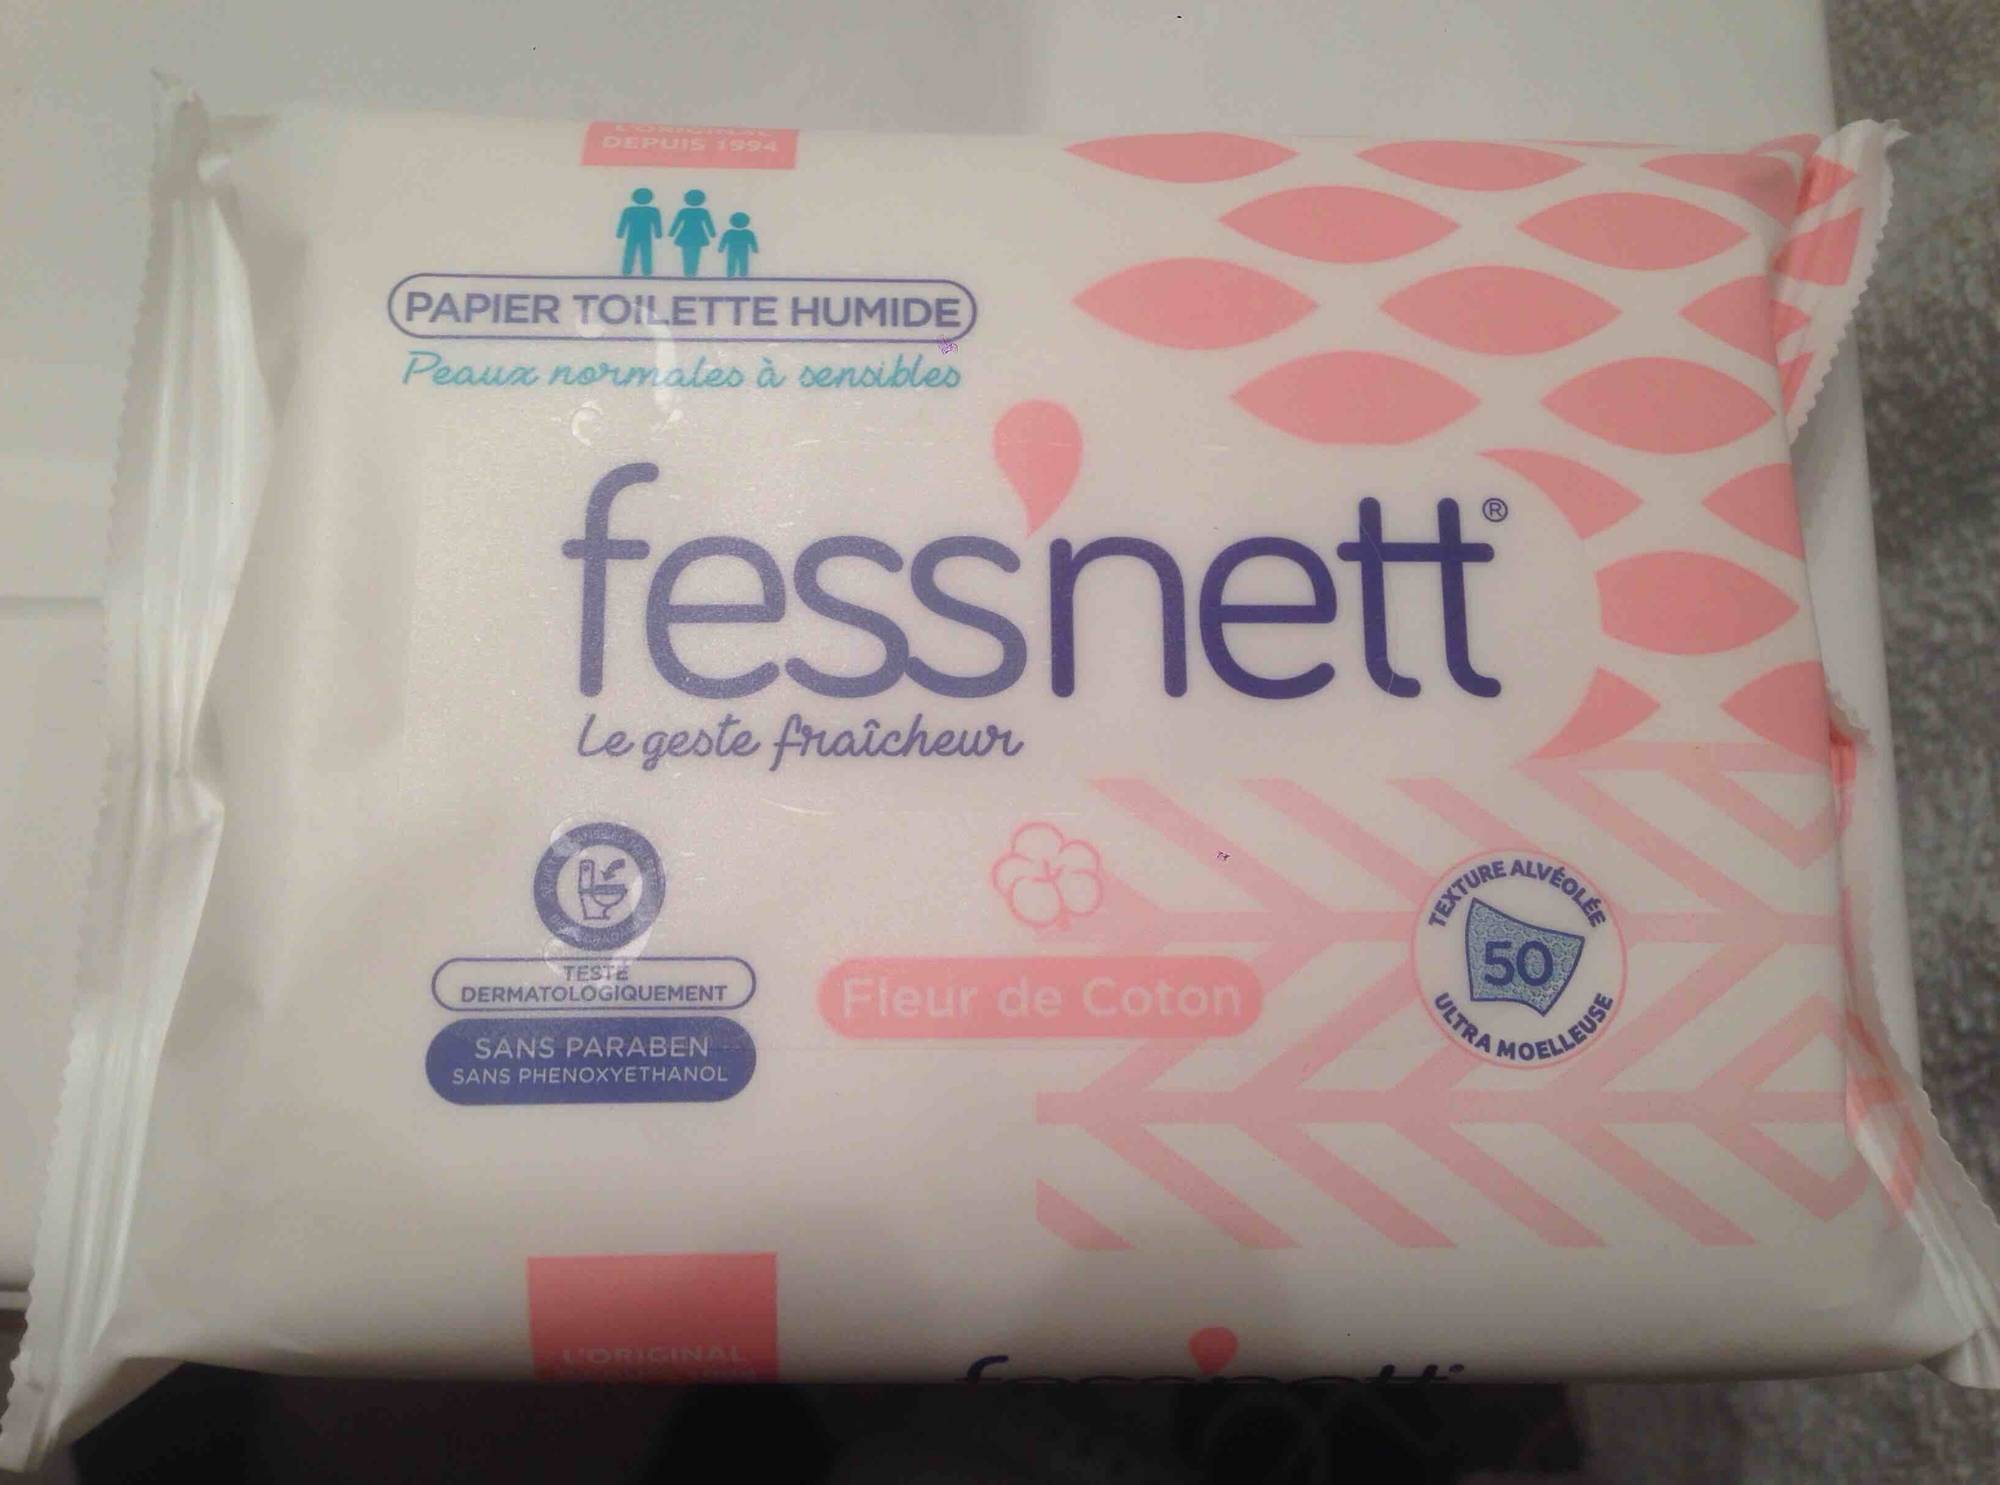 Fess'nett Fess'nett Papier Toilette Humide Fleur De Coton 20